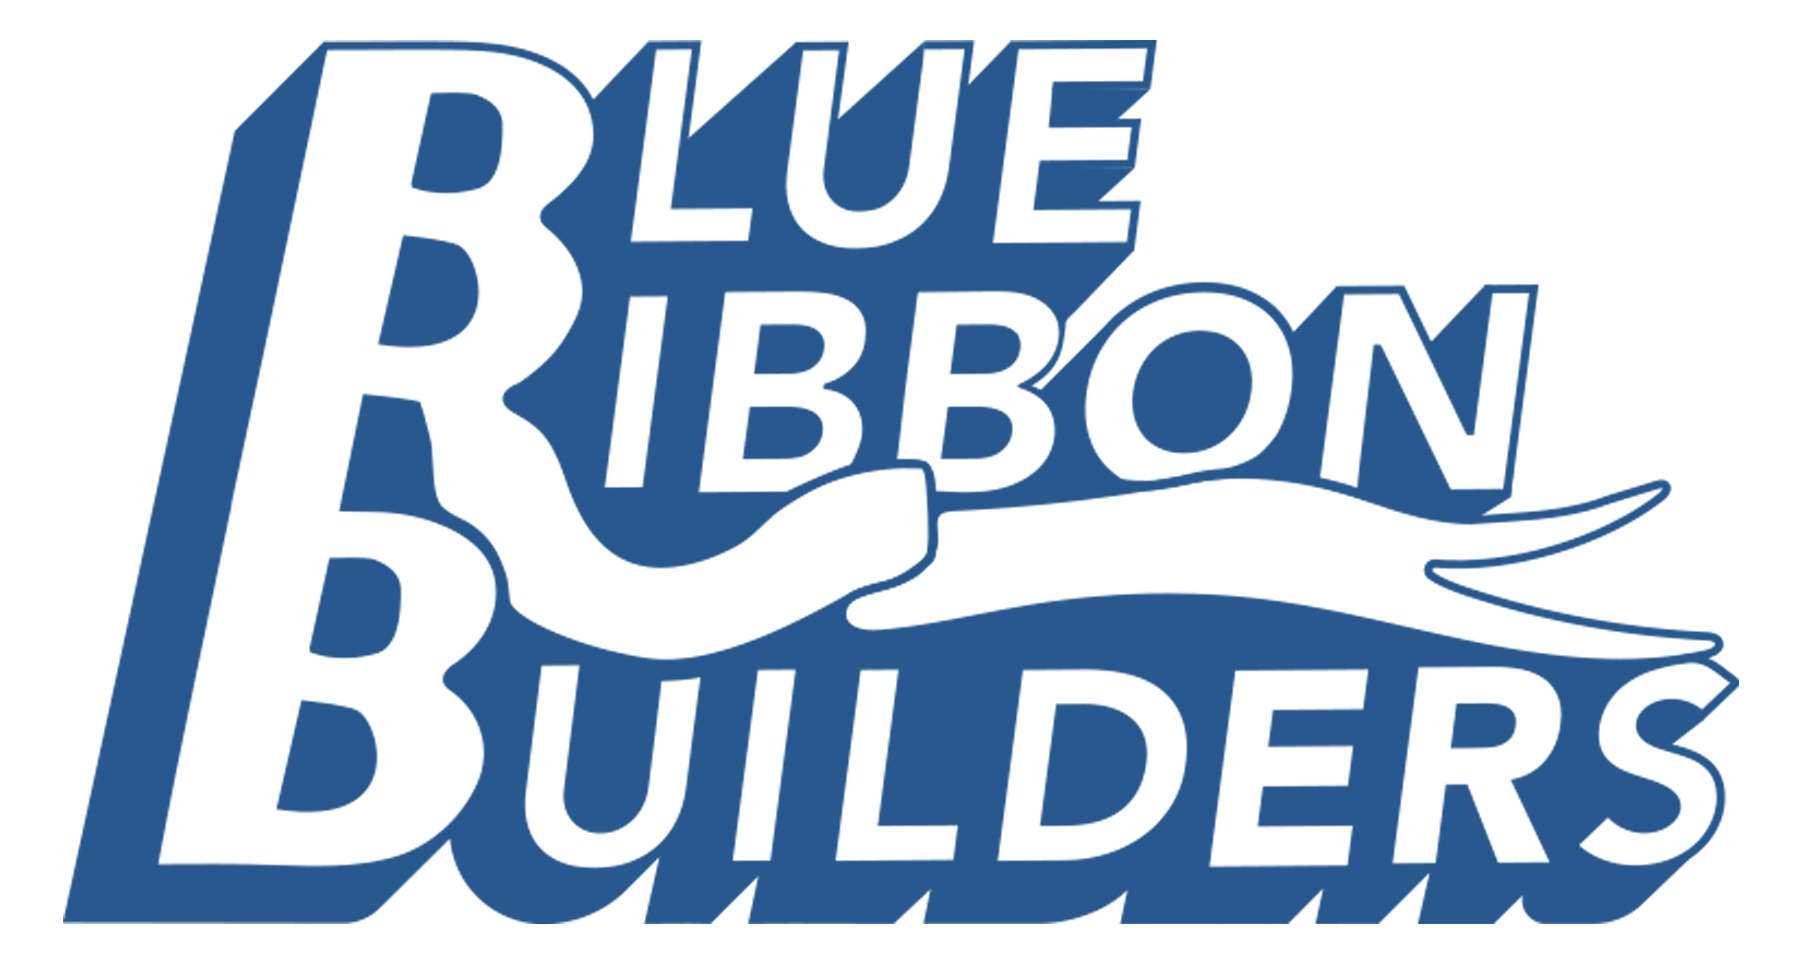 BRB_Blue_logo.png